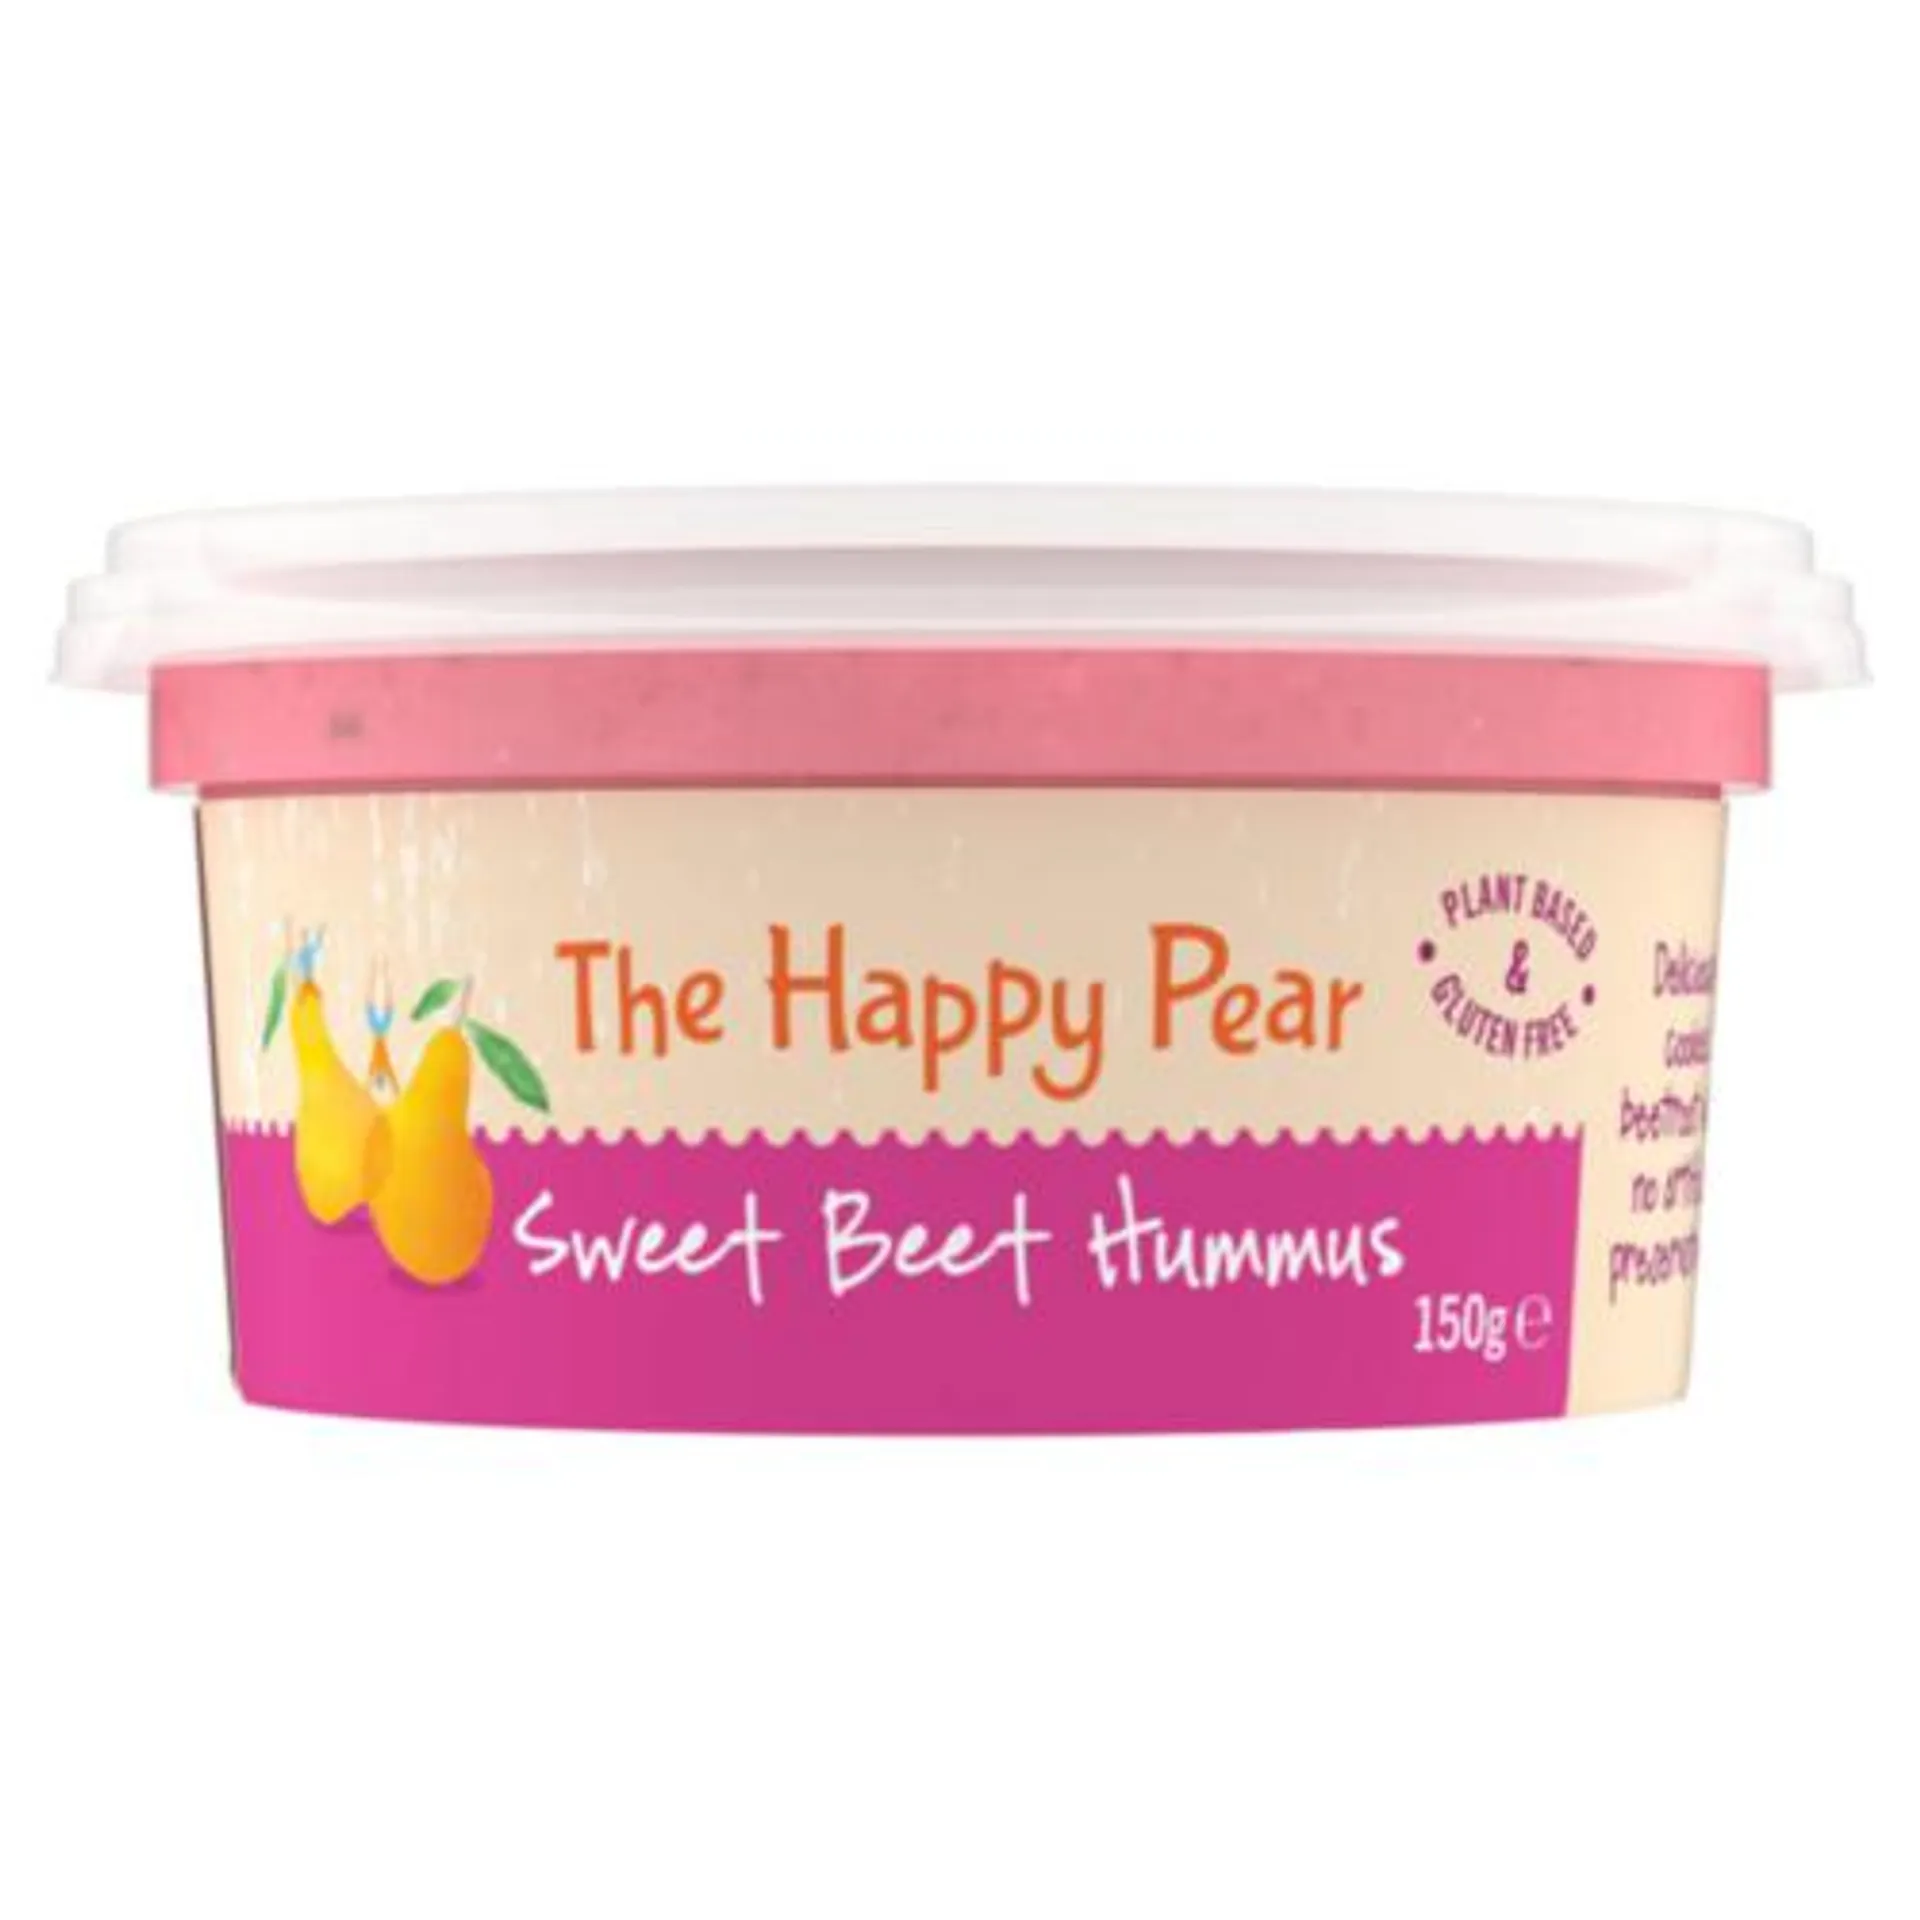 The Happy Pear Sweet Beet Hummus